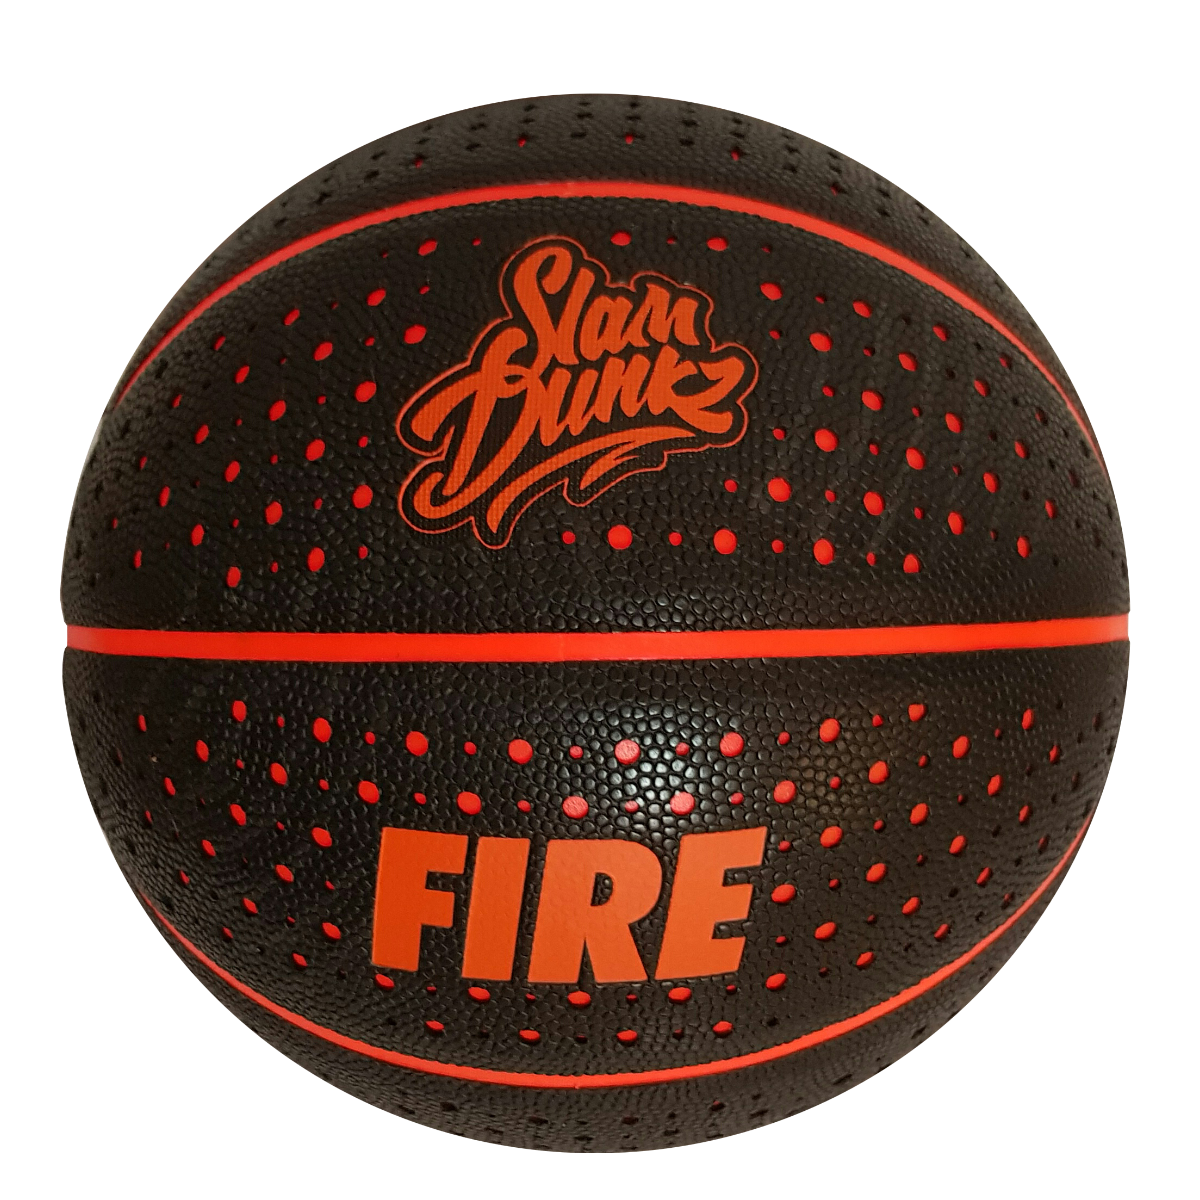 Slamdunkz - Fire Led Basketball